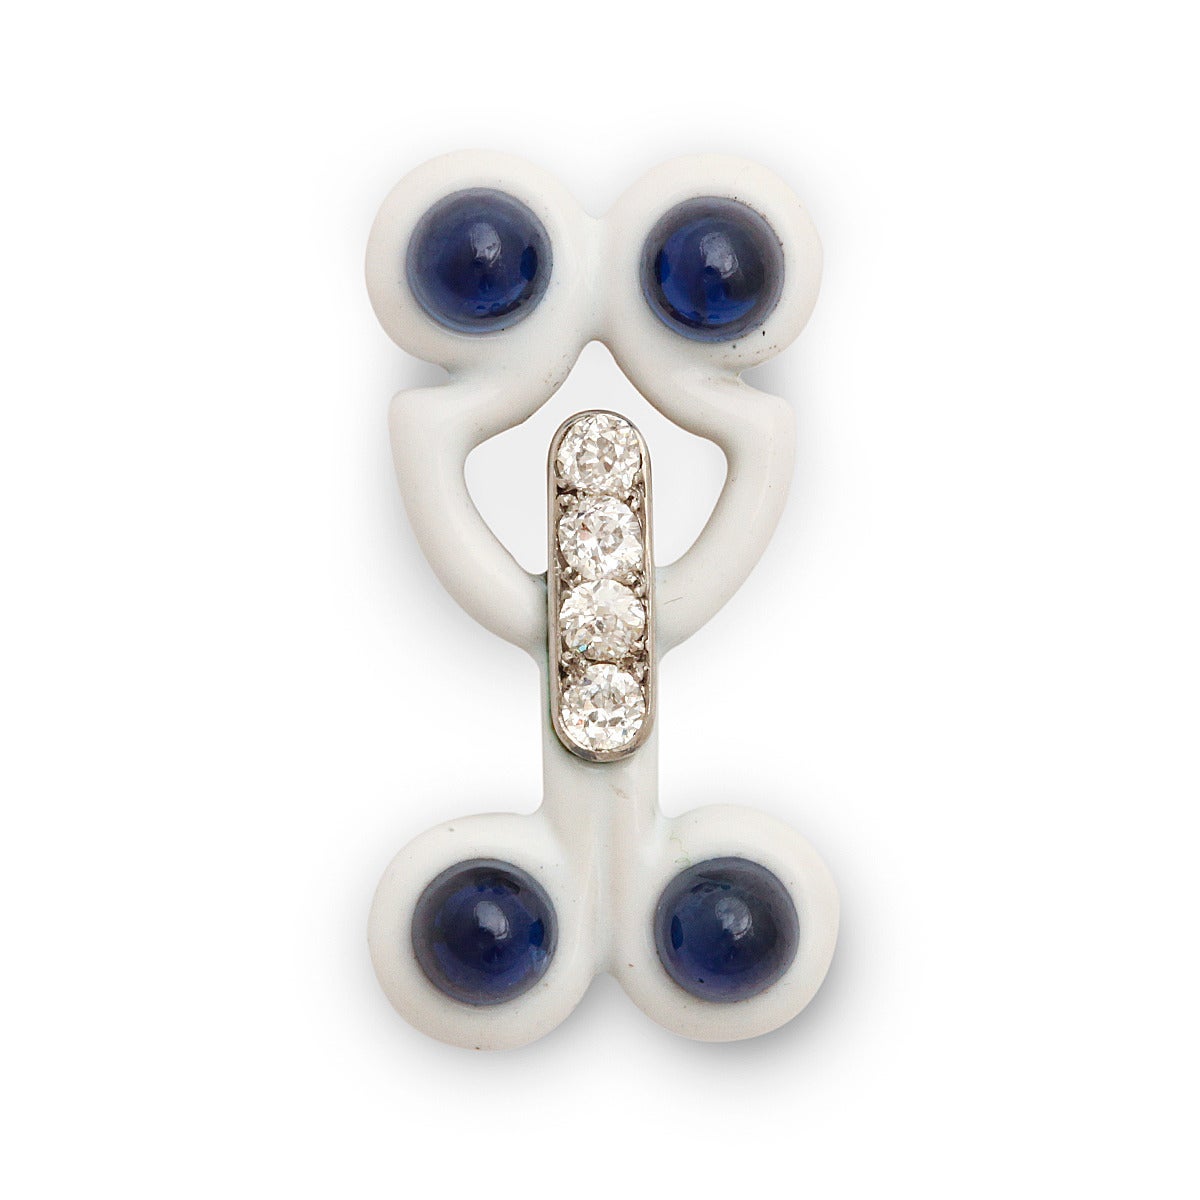 White enamel, cabochon sapphire, and diamond fantasy pin. 

Cartier, Paris ca. 1920